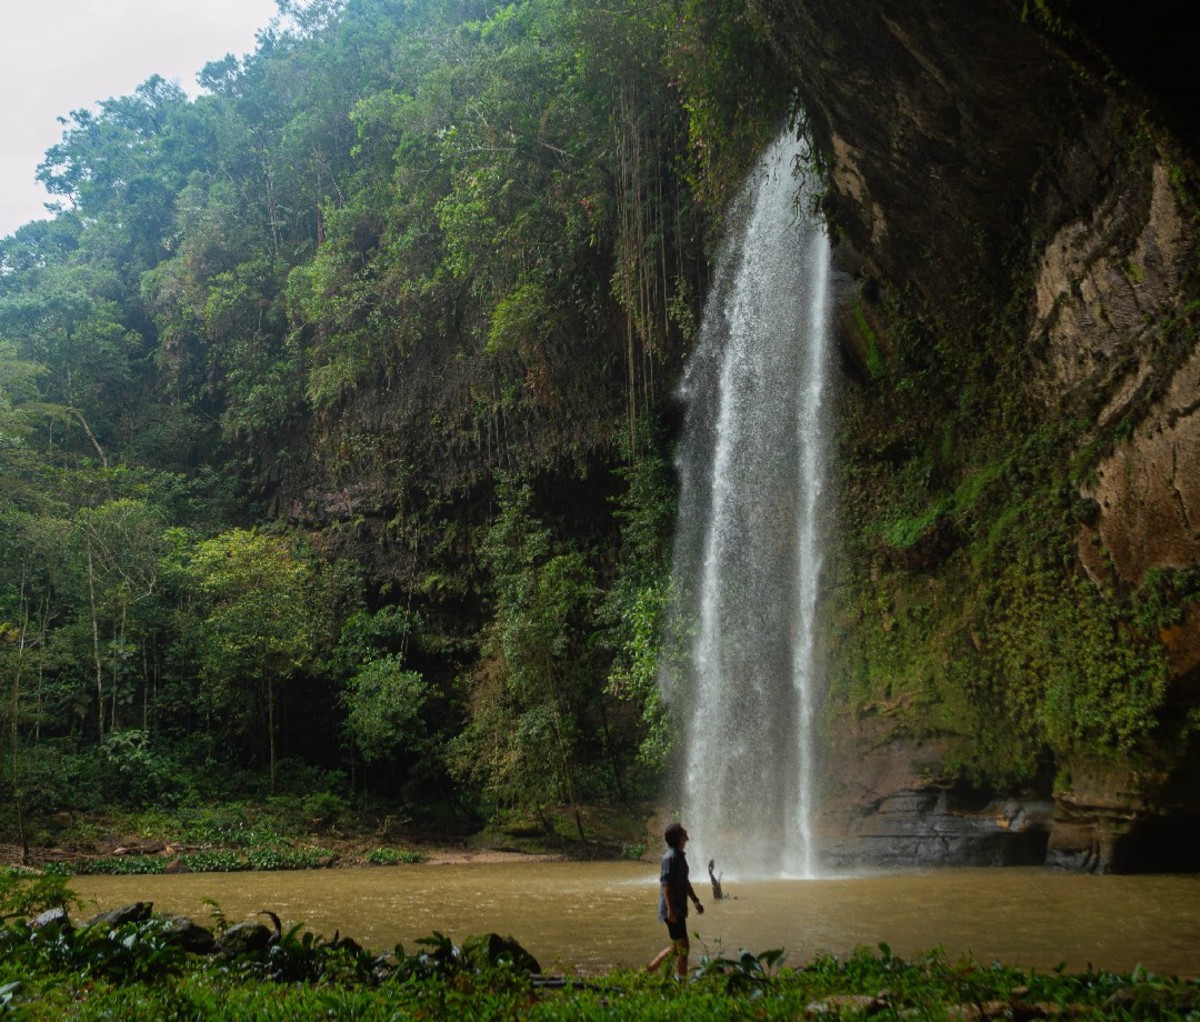 Man walking along a river beside a waterfall.